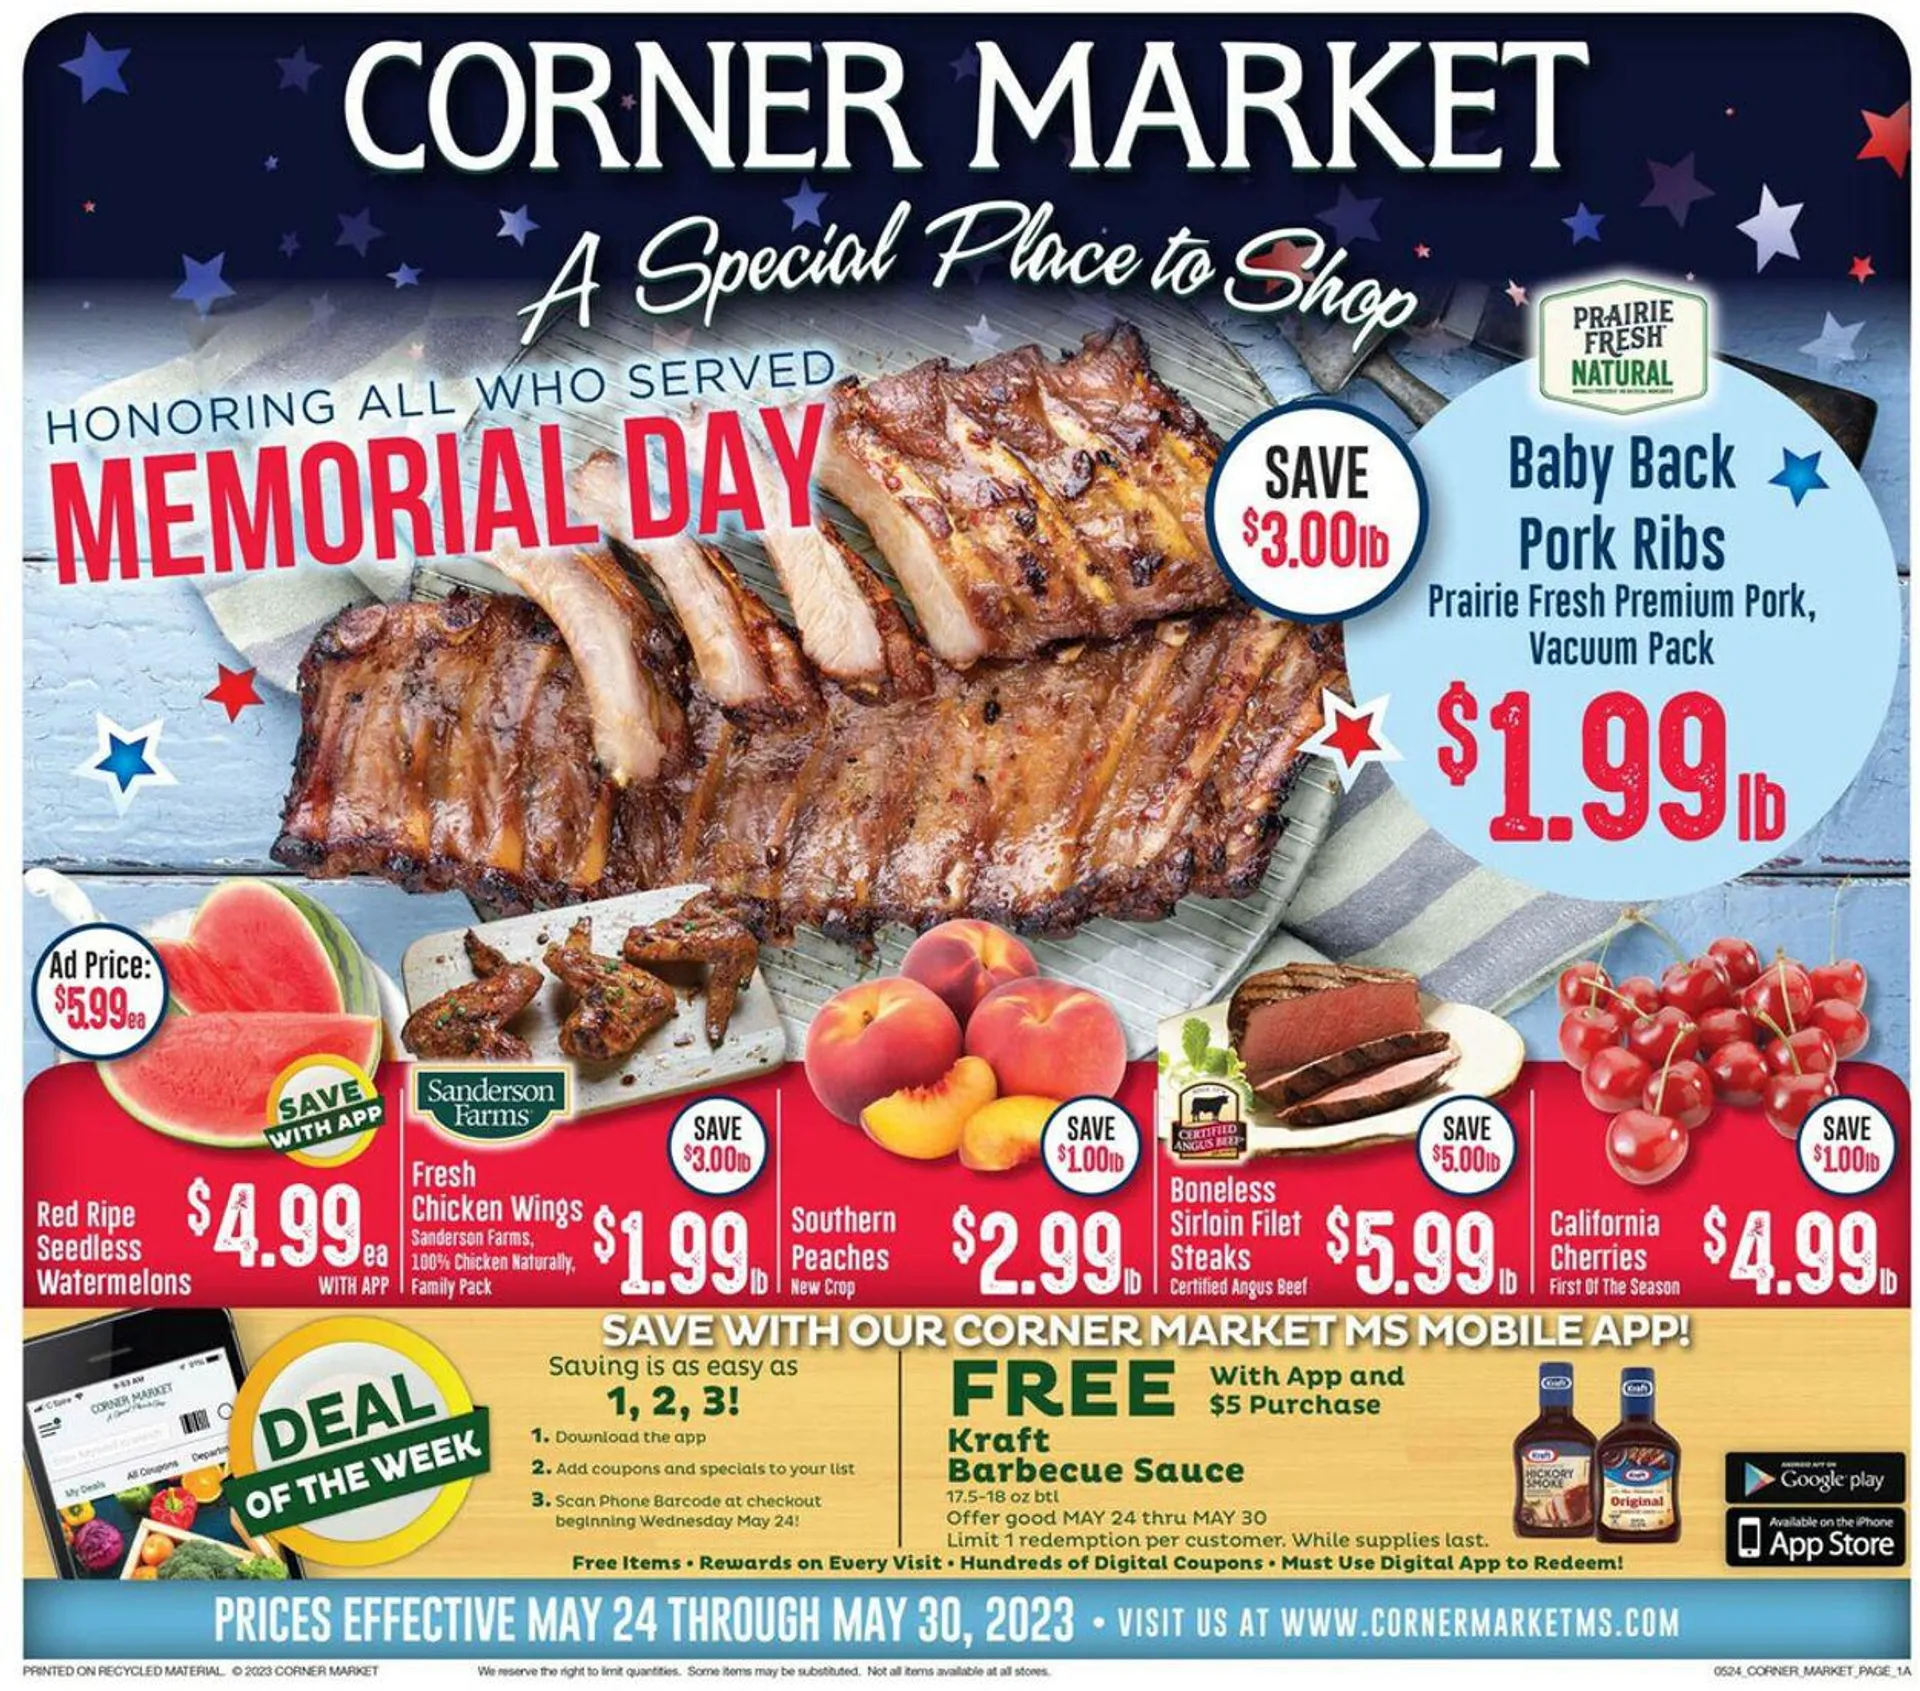 Corner Market - Memorial Day 2023 - 1